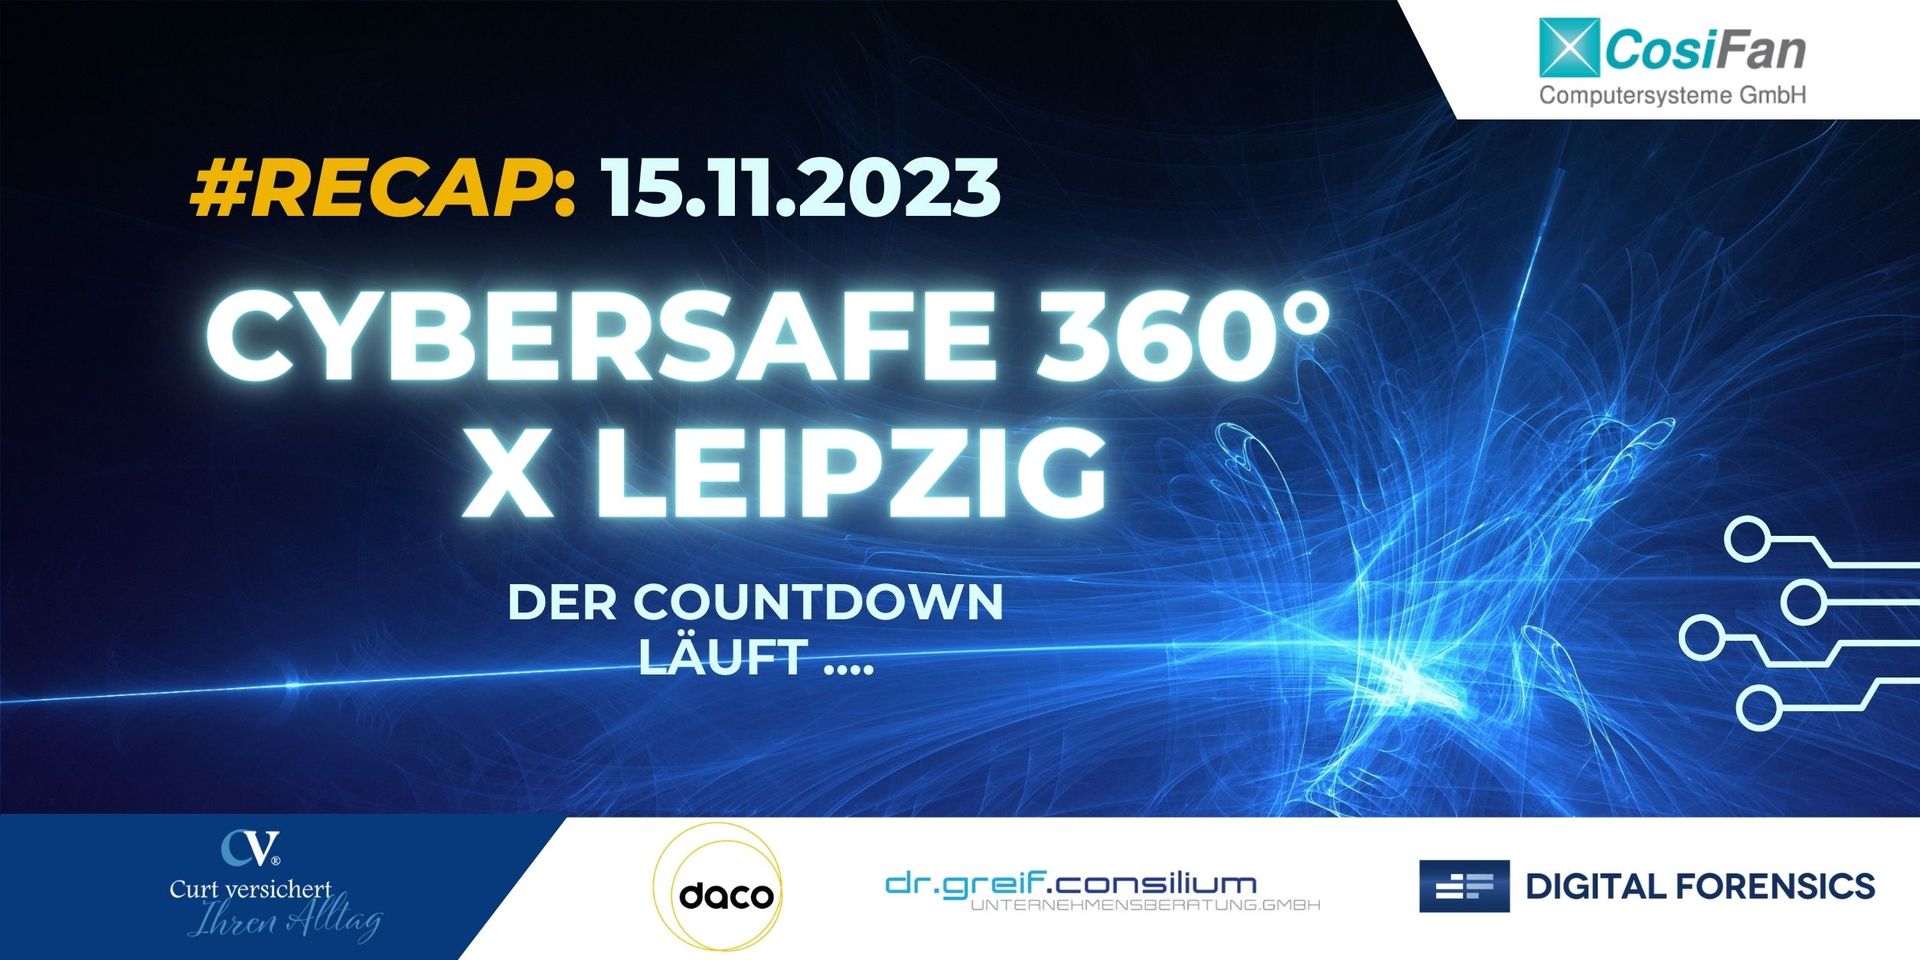 Recap: 15.11.2023 Cybersafe360 x Leipzig